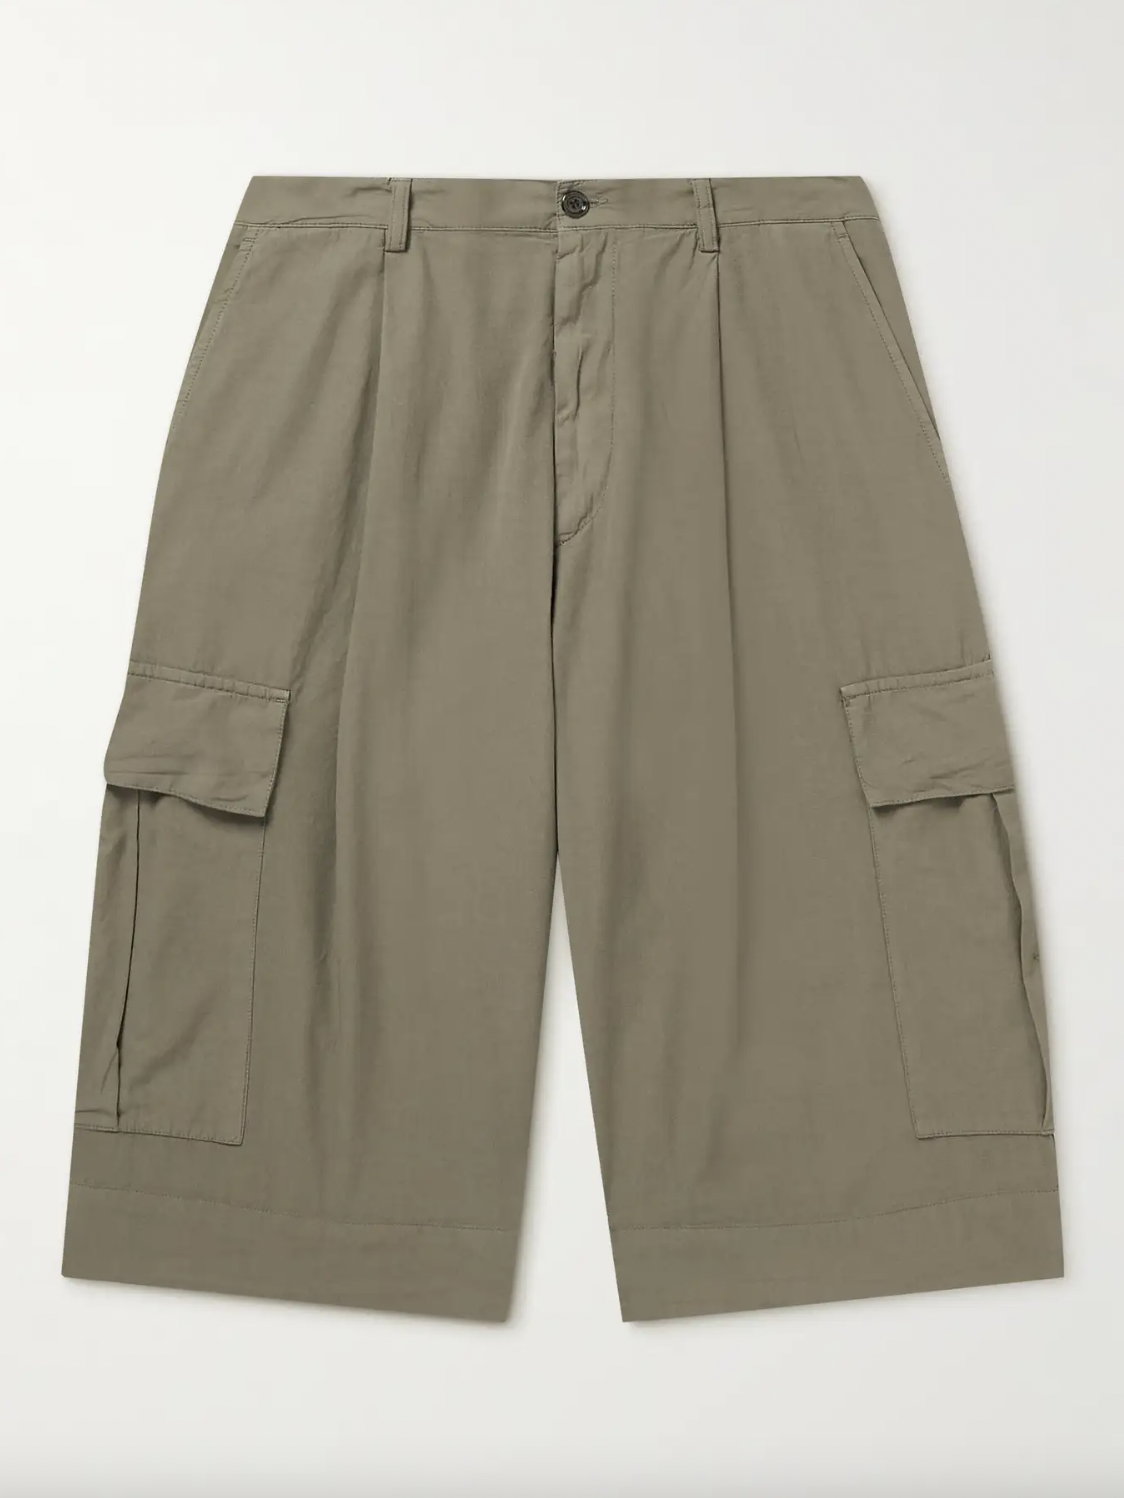 Chickle Mens Straight-Fit Cotton 3/4 Cargo Shorts M Khaki